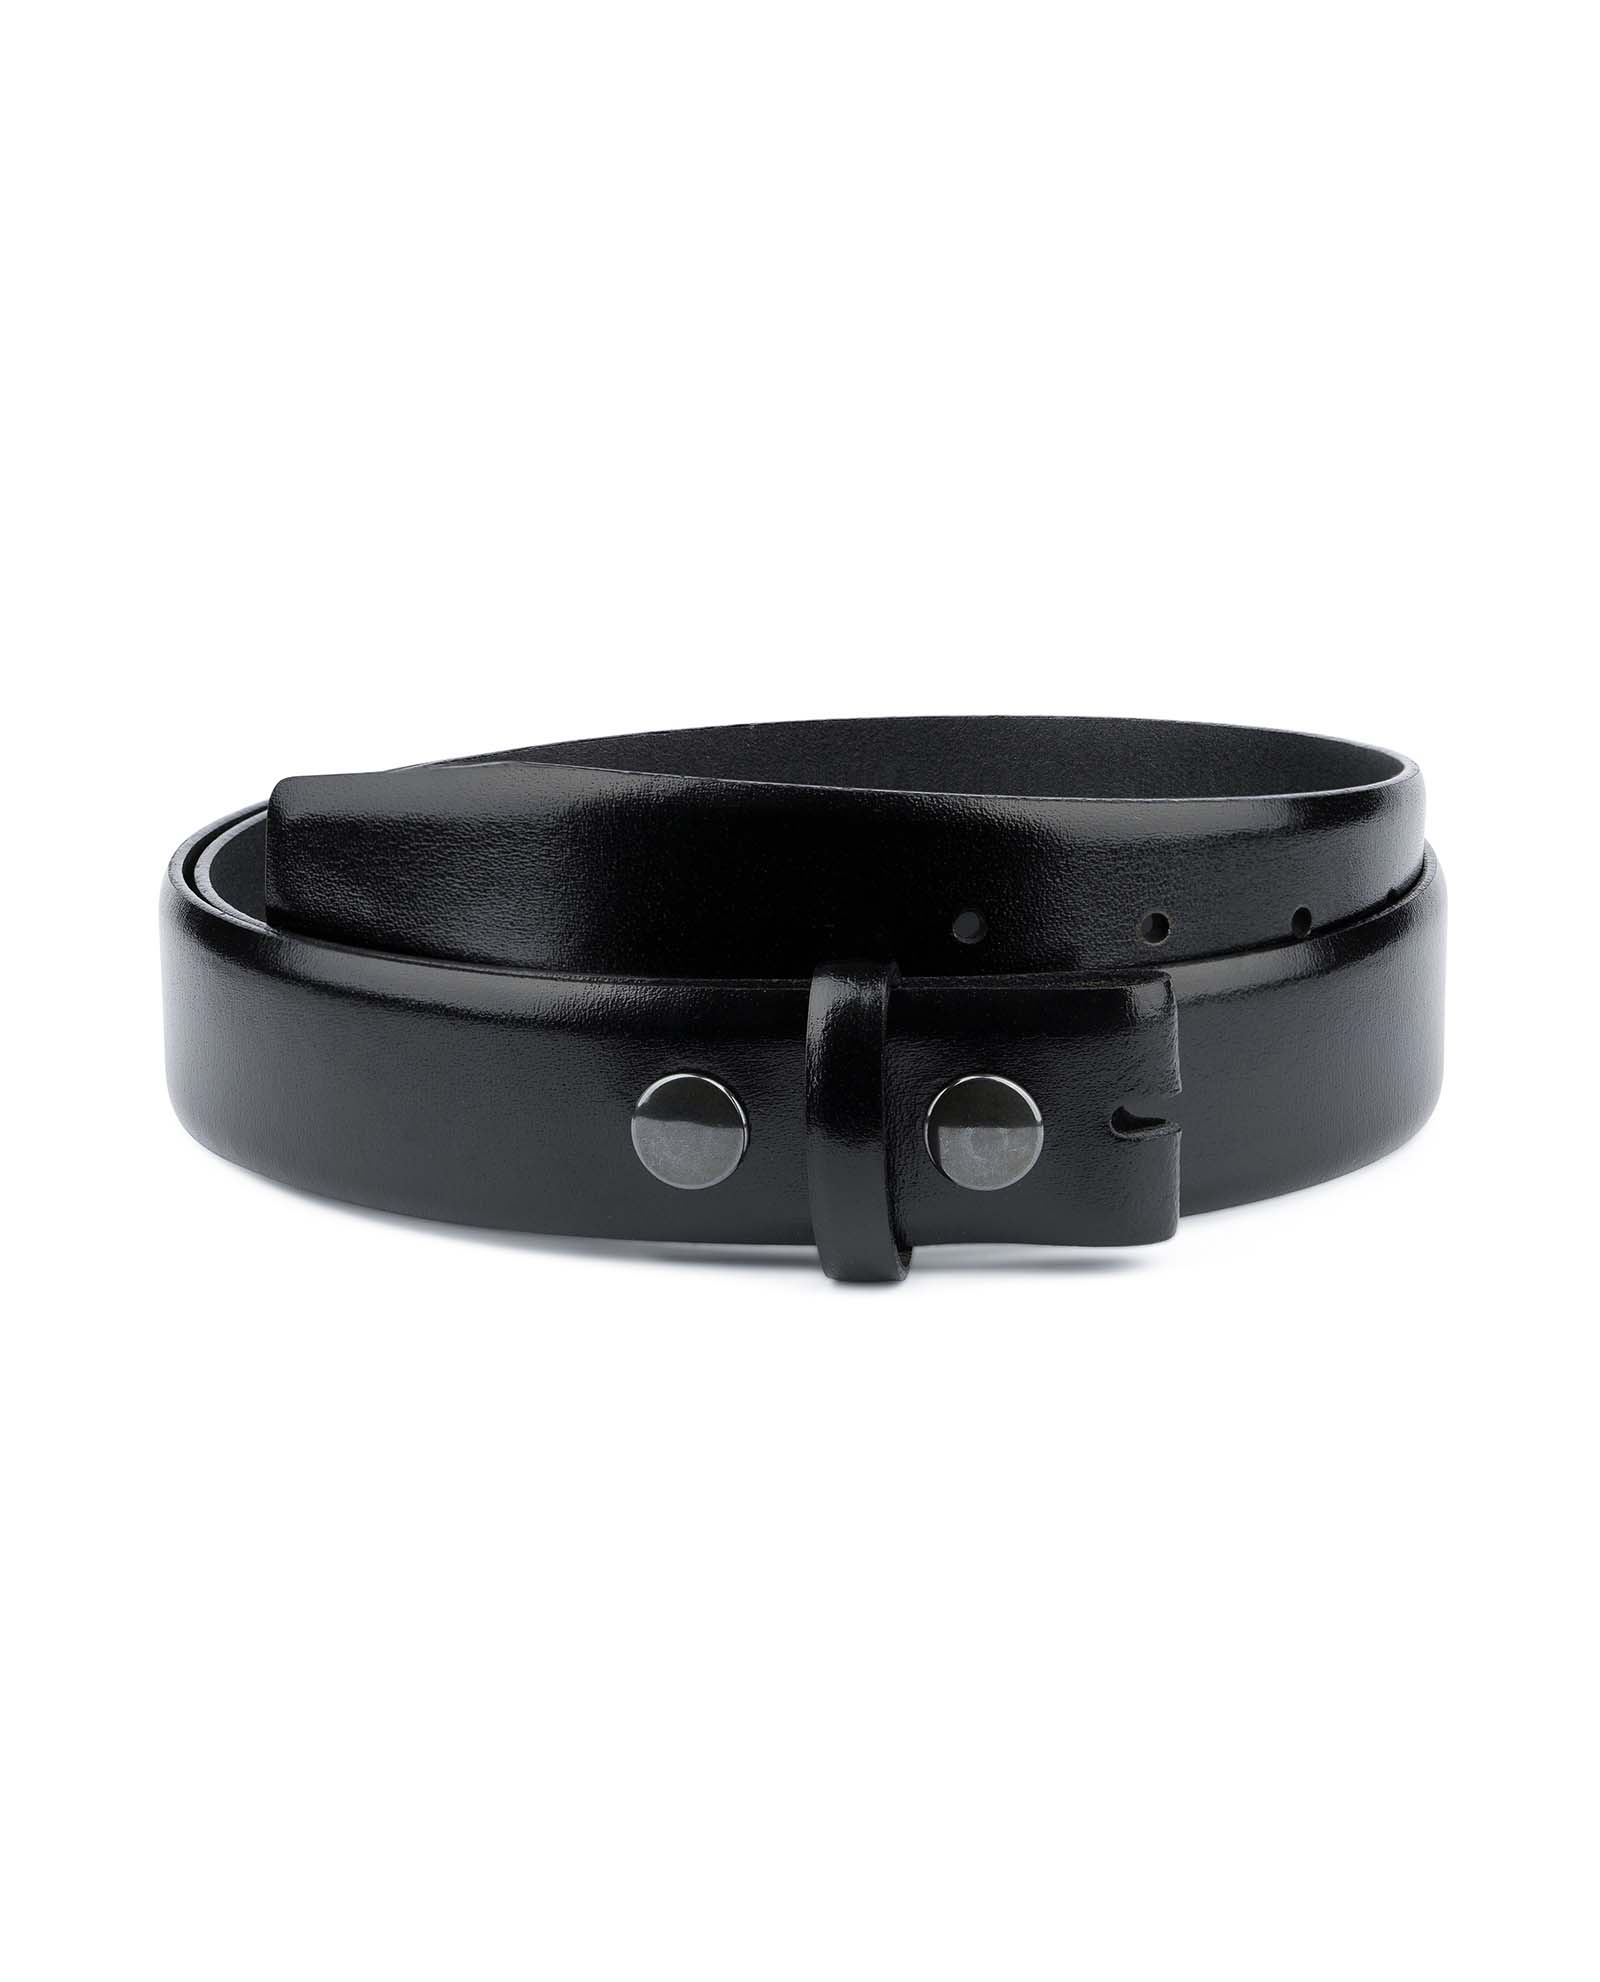 Buy Men's Black Leather Belt | With no Buckle | LeatherBeltsOnline.com